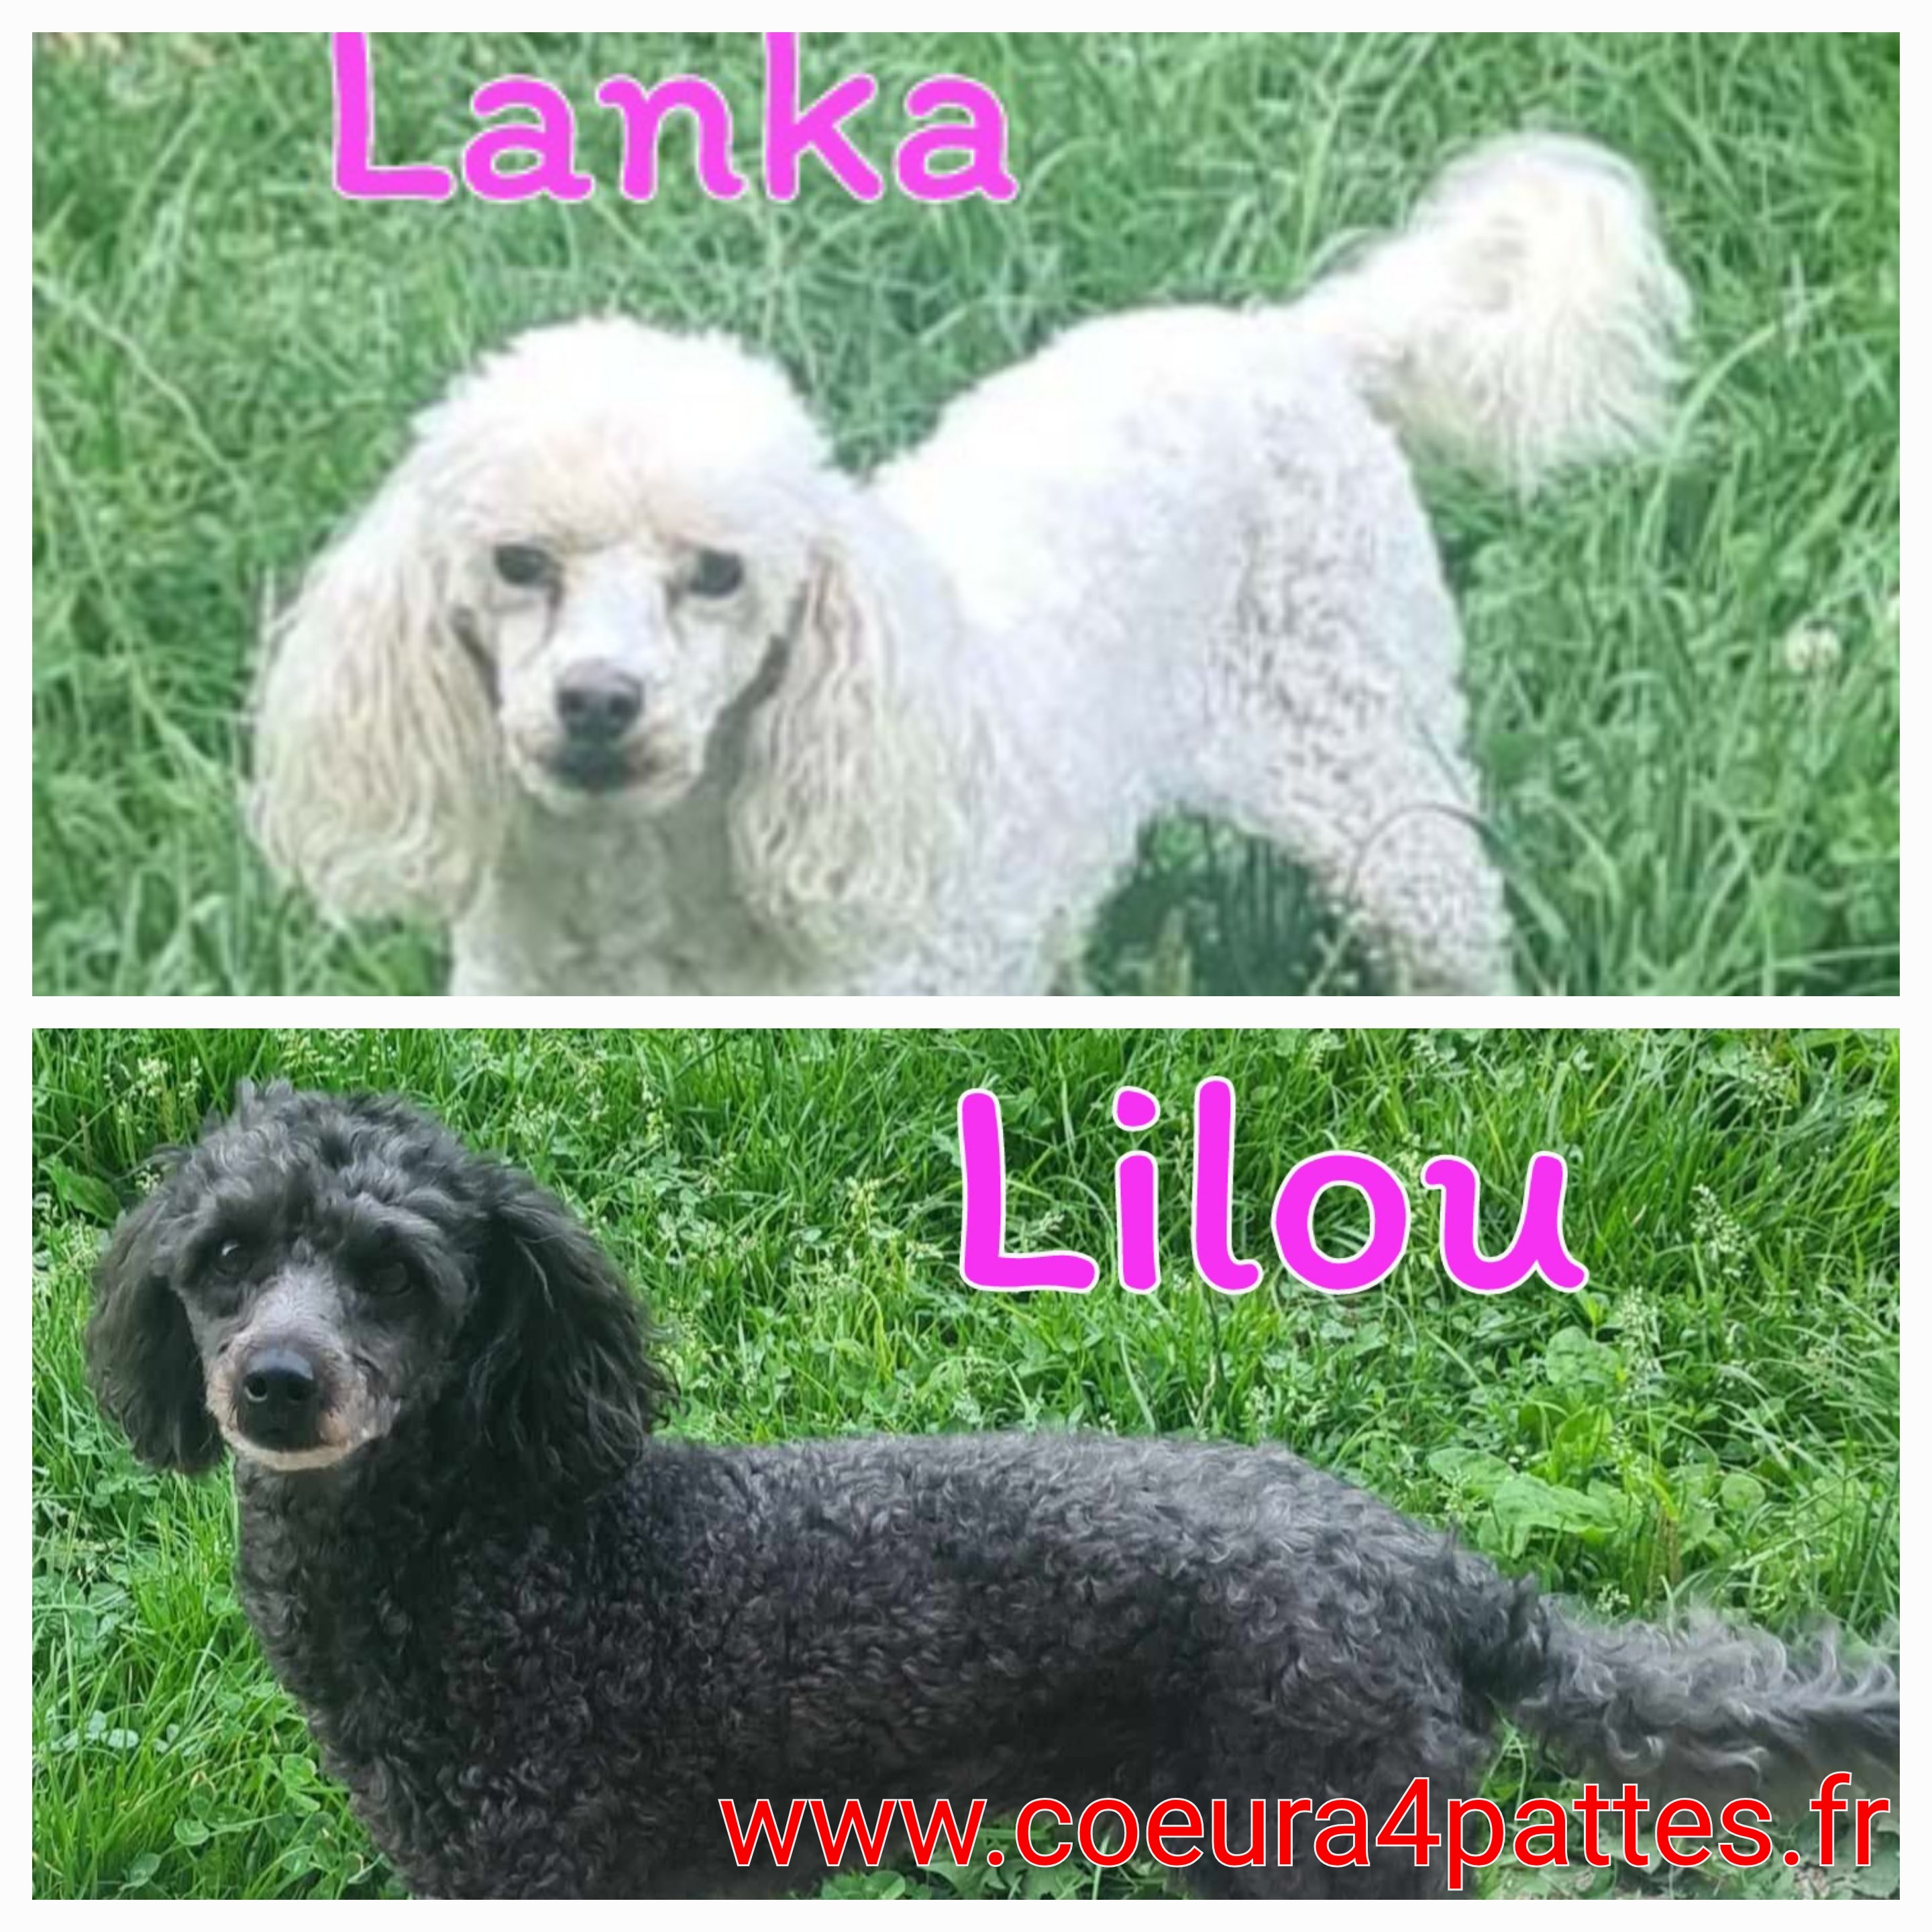 Lilou et Lanka